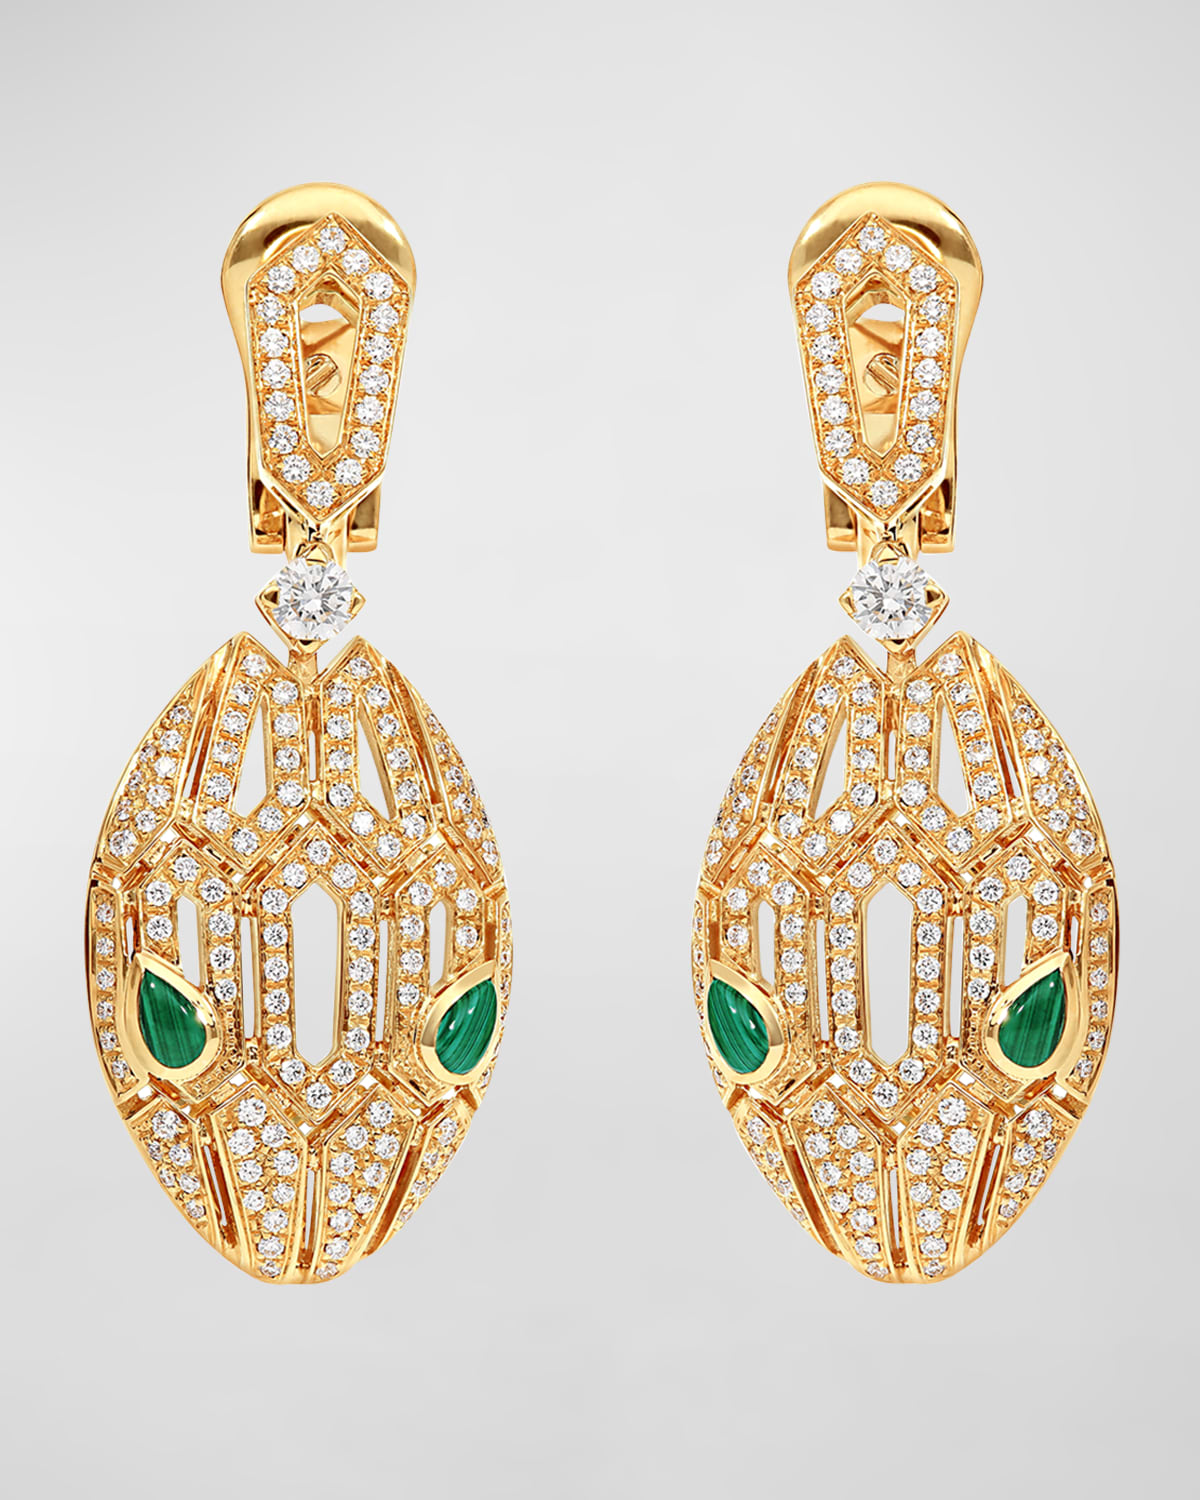 BVLGARI Serpenti Drop Earrings in 18k Rose Gold with Diamonds and Malachite